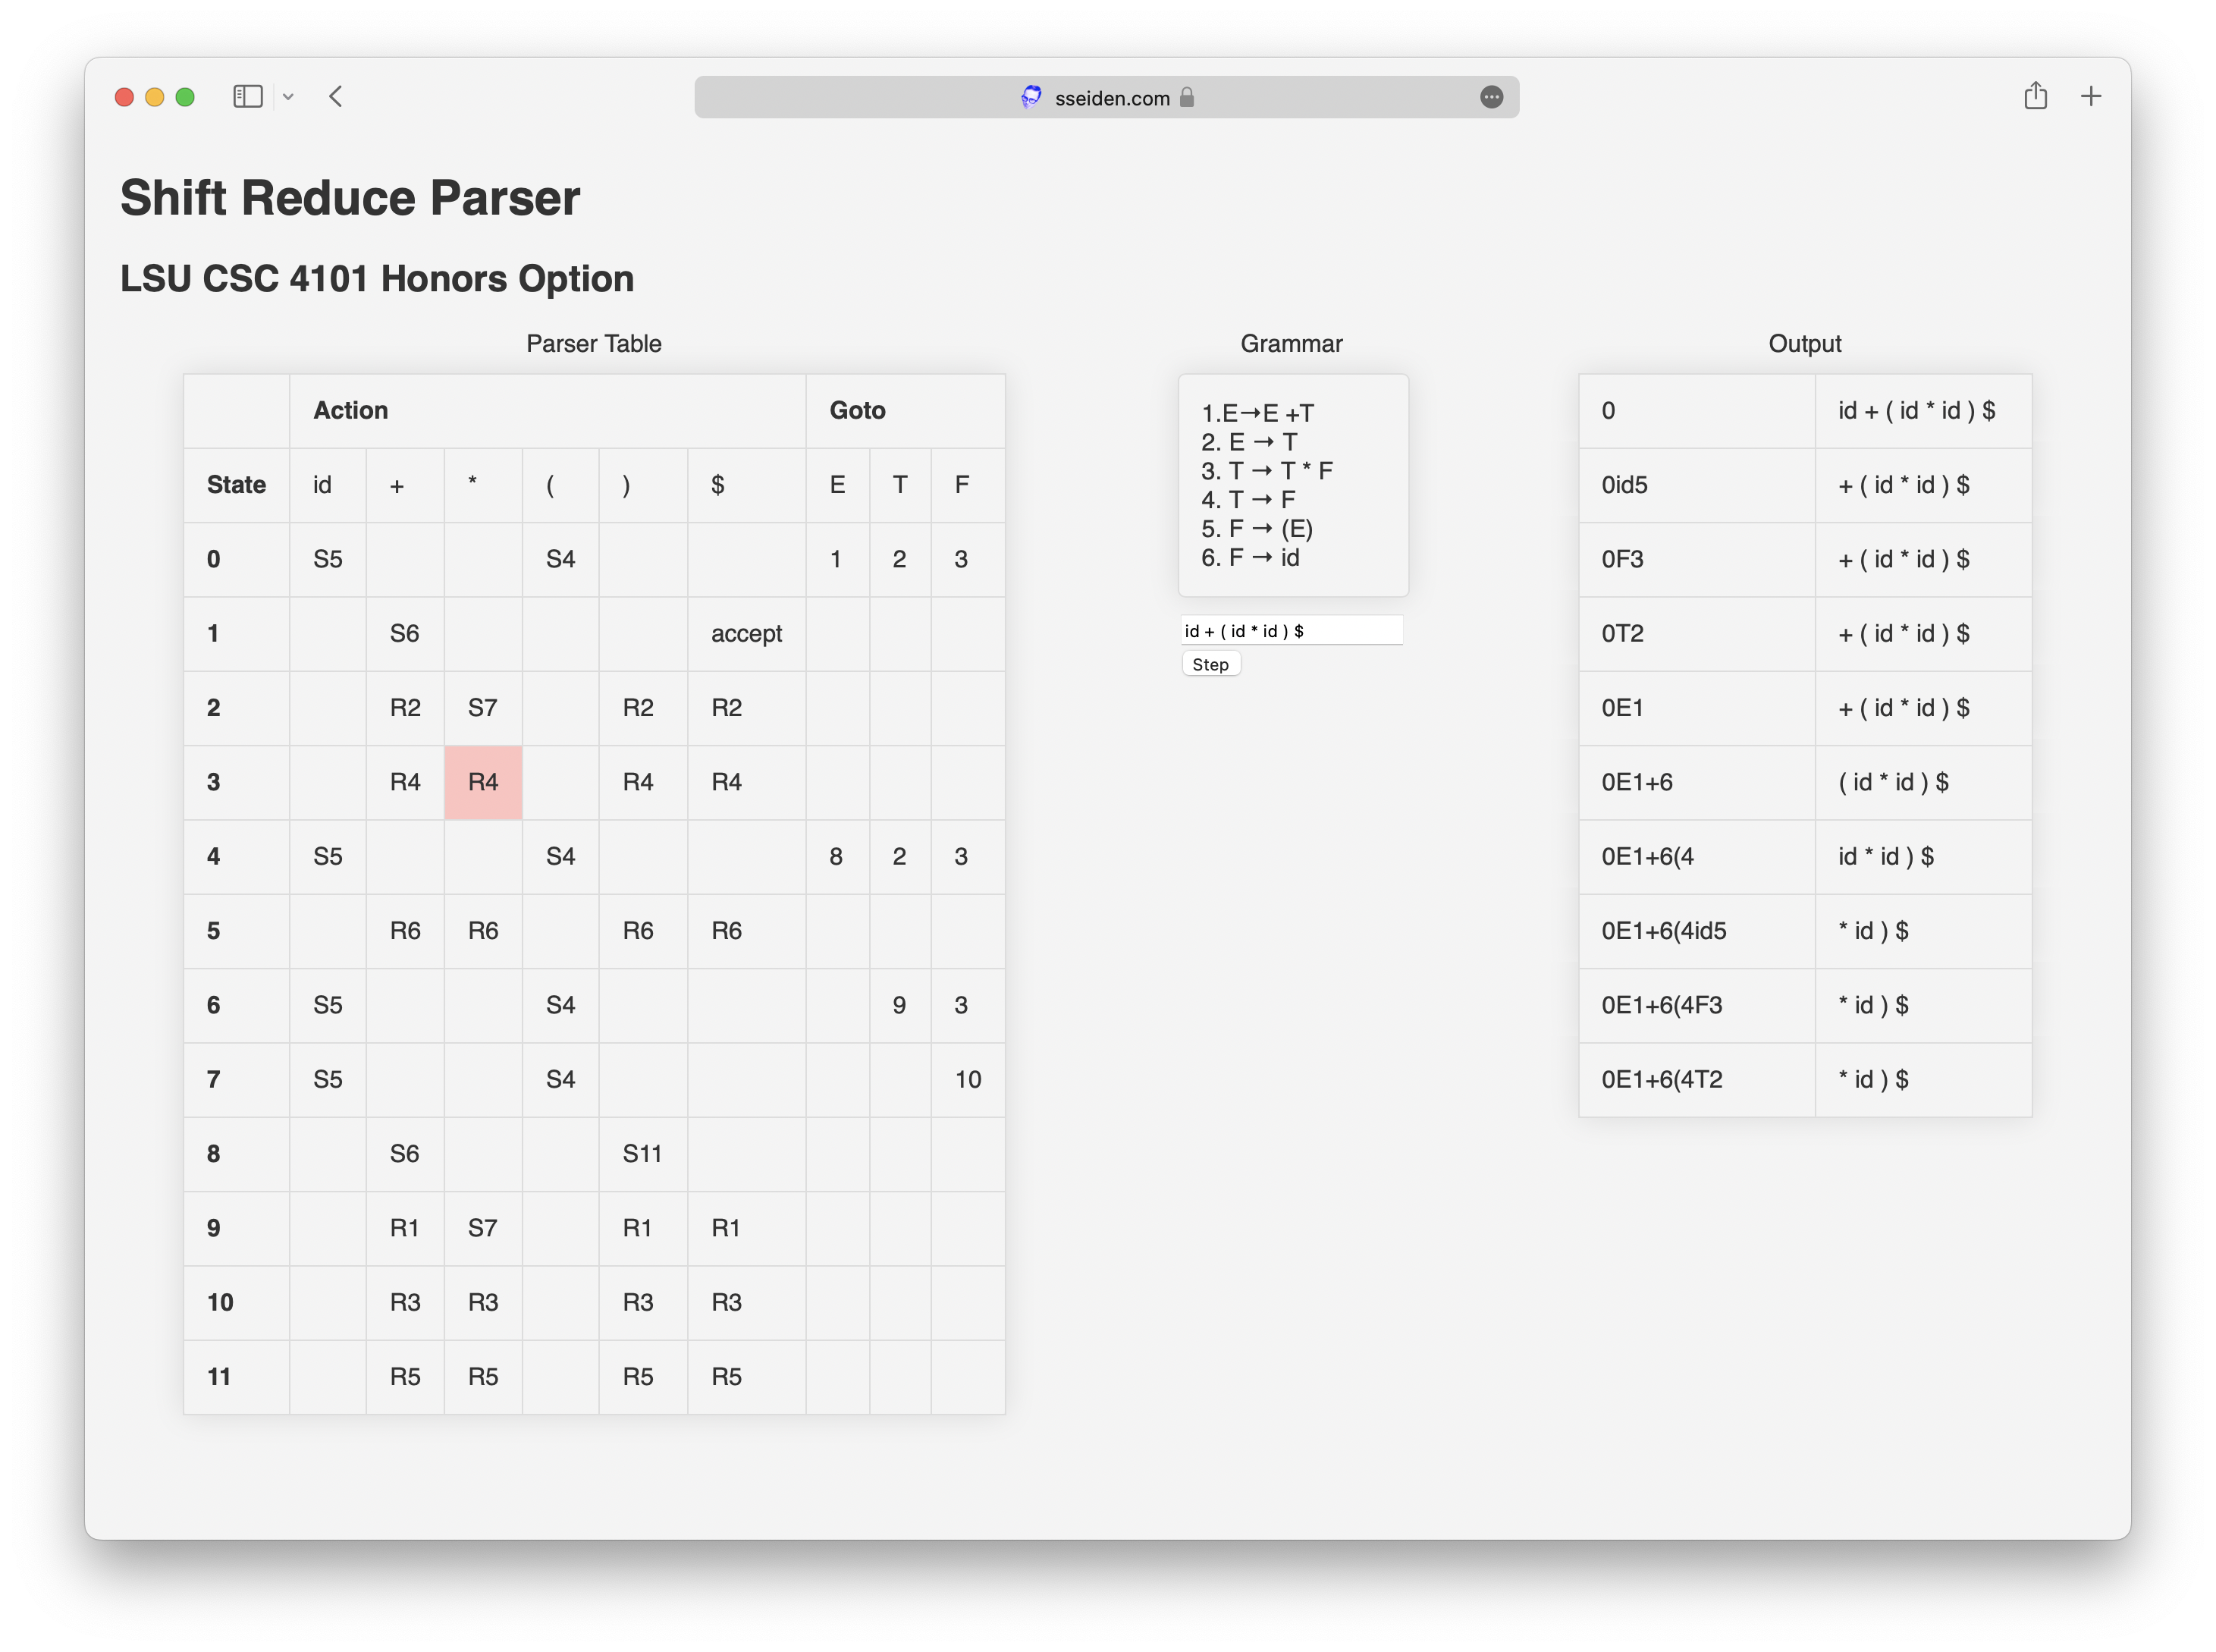 A screenshot of my Shift Reduce Parser Calculator